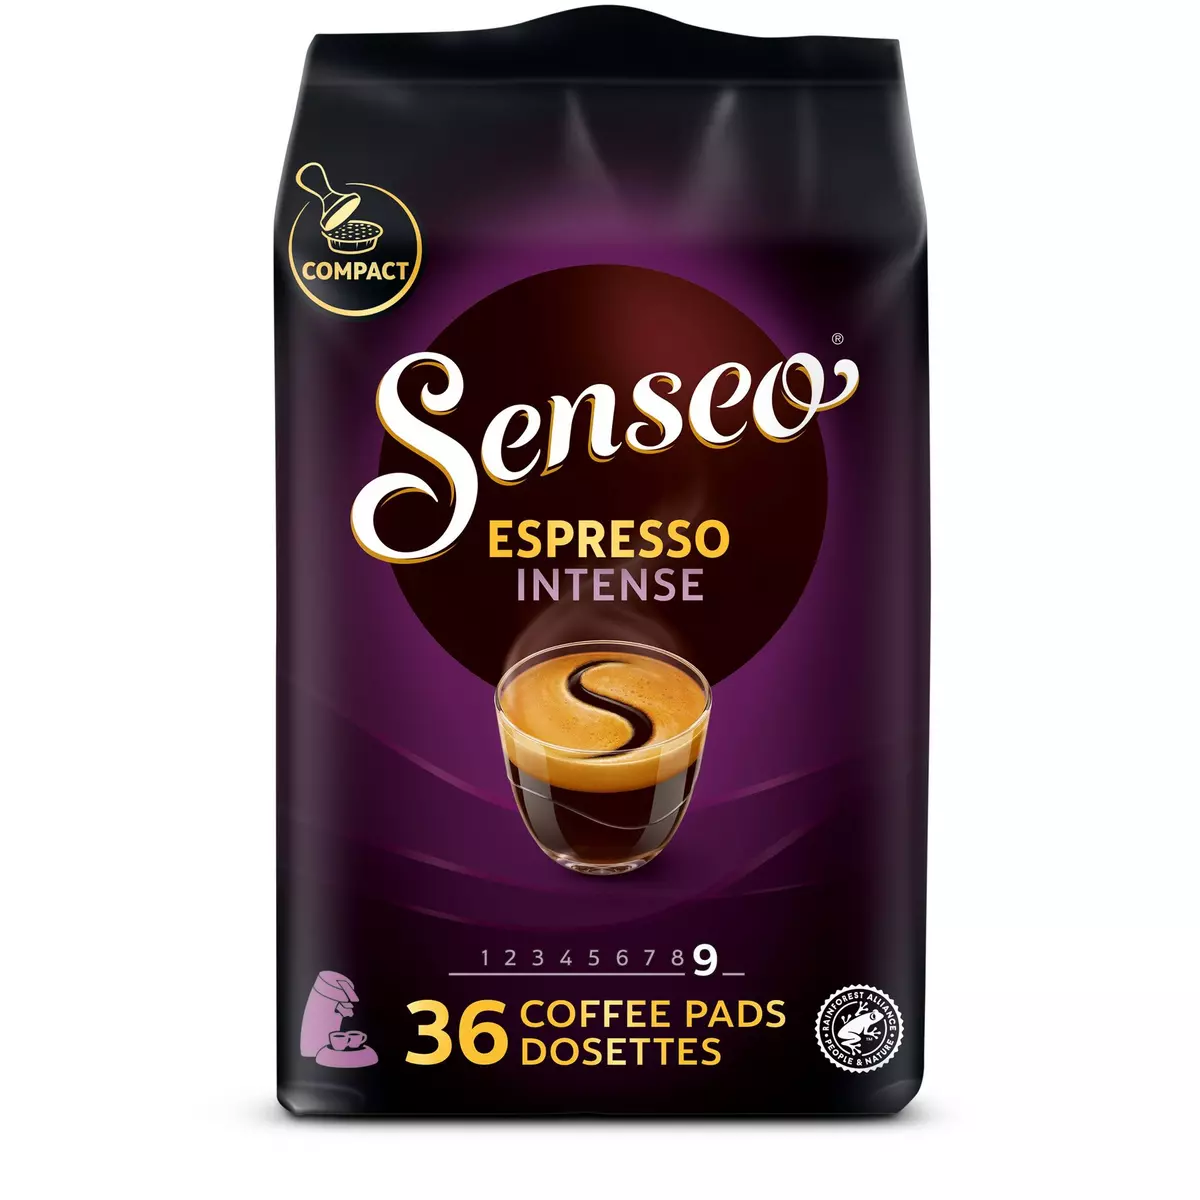 TASSIMO L'Or dosettes de café long intense 208g 2x16 dosettes pas cher 